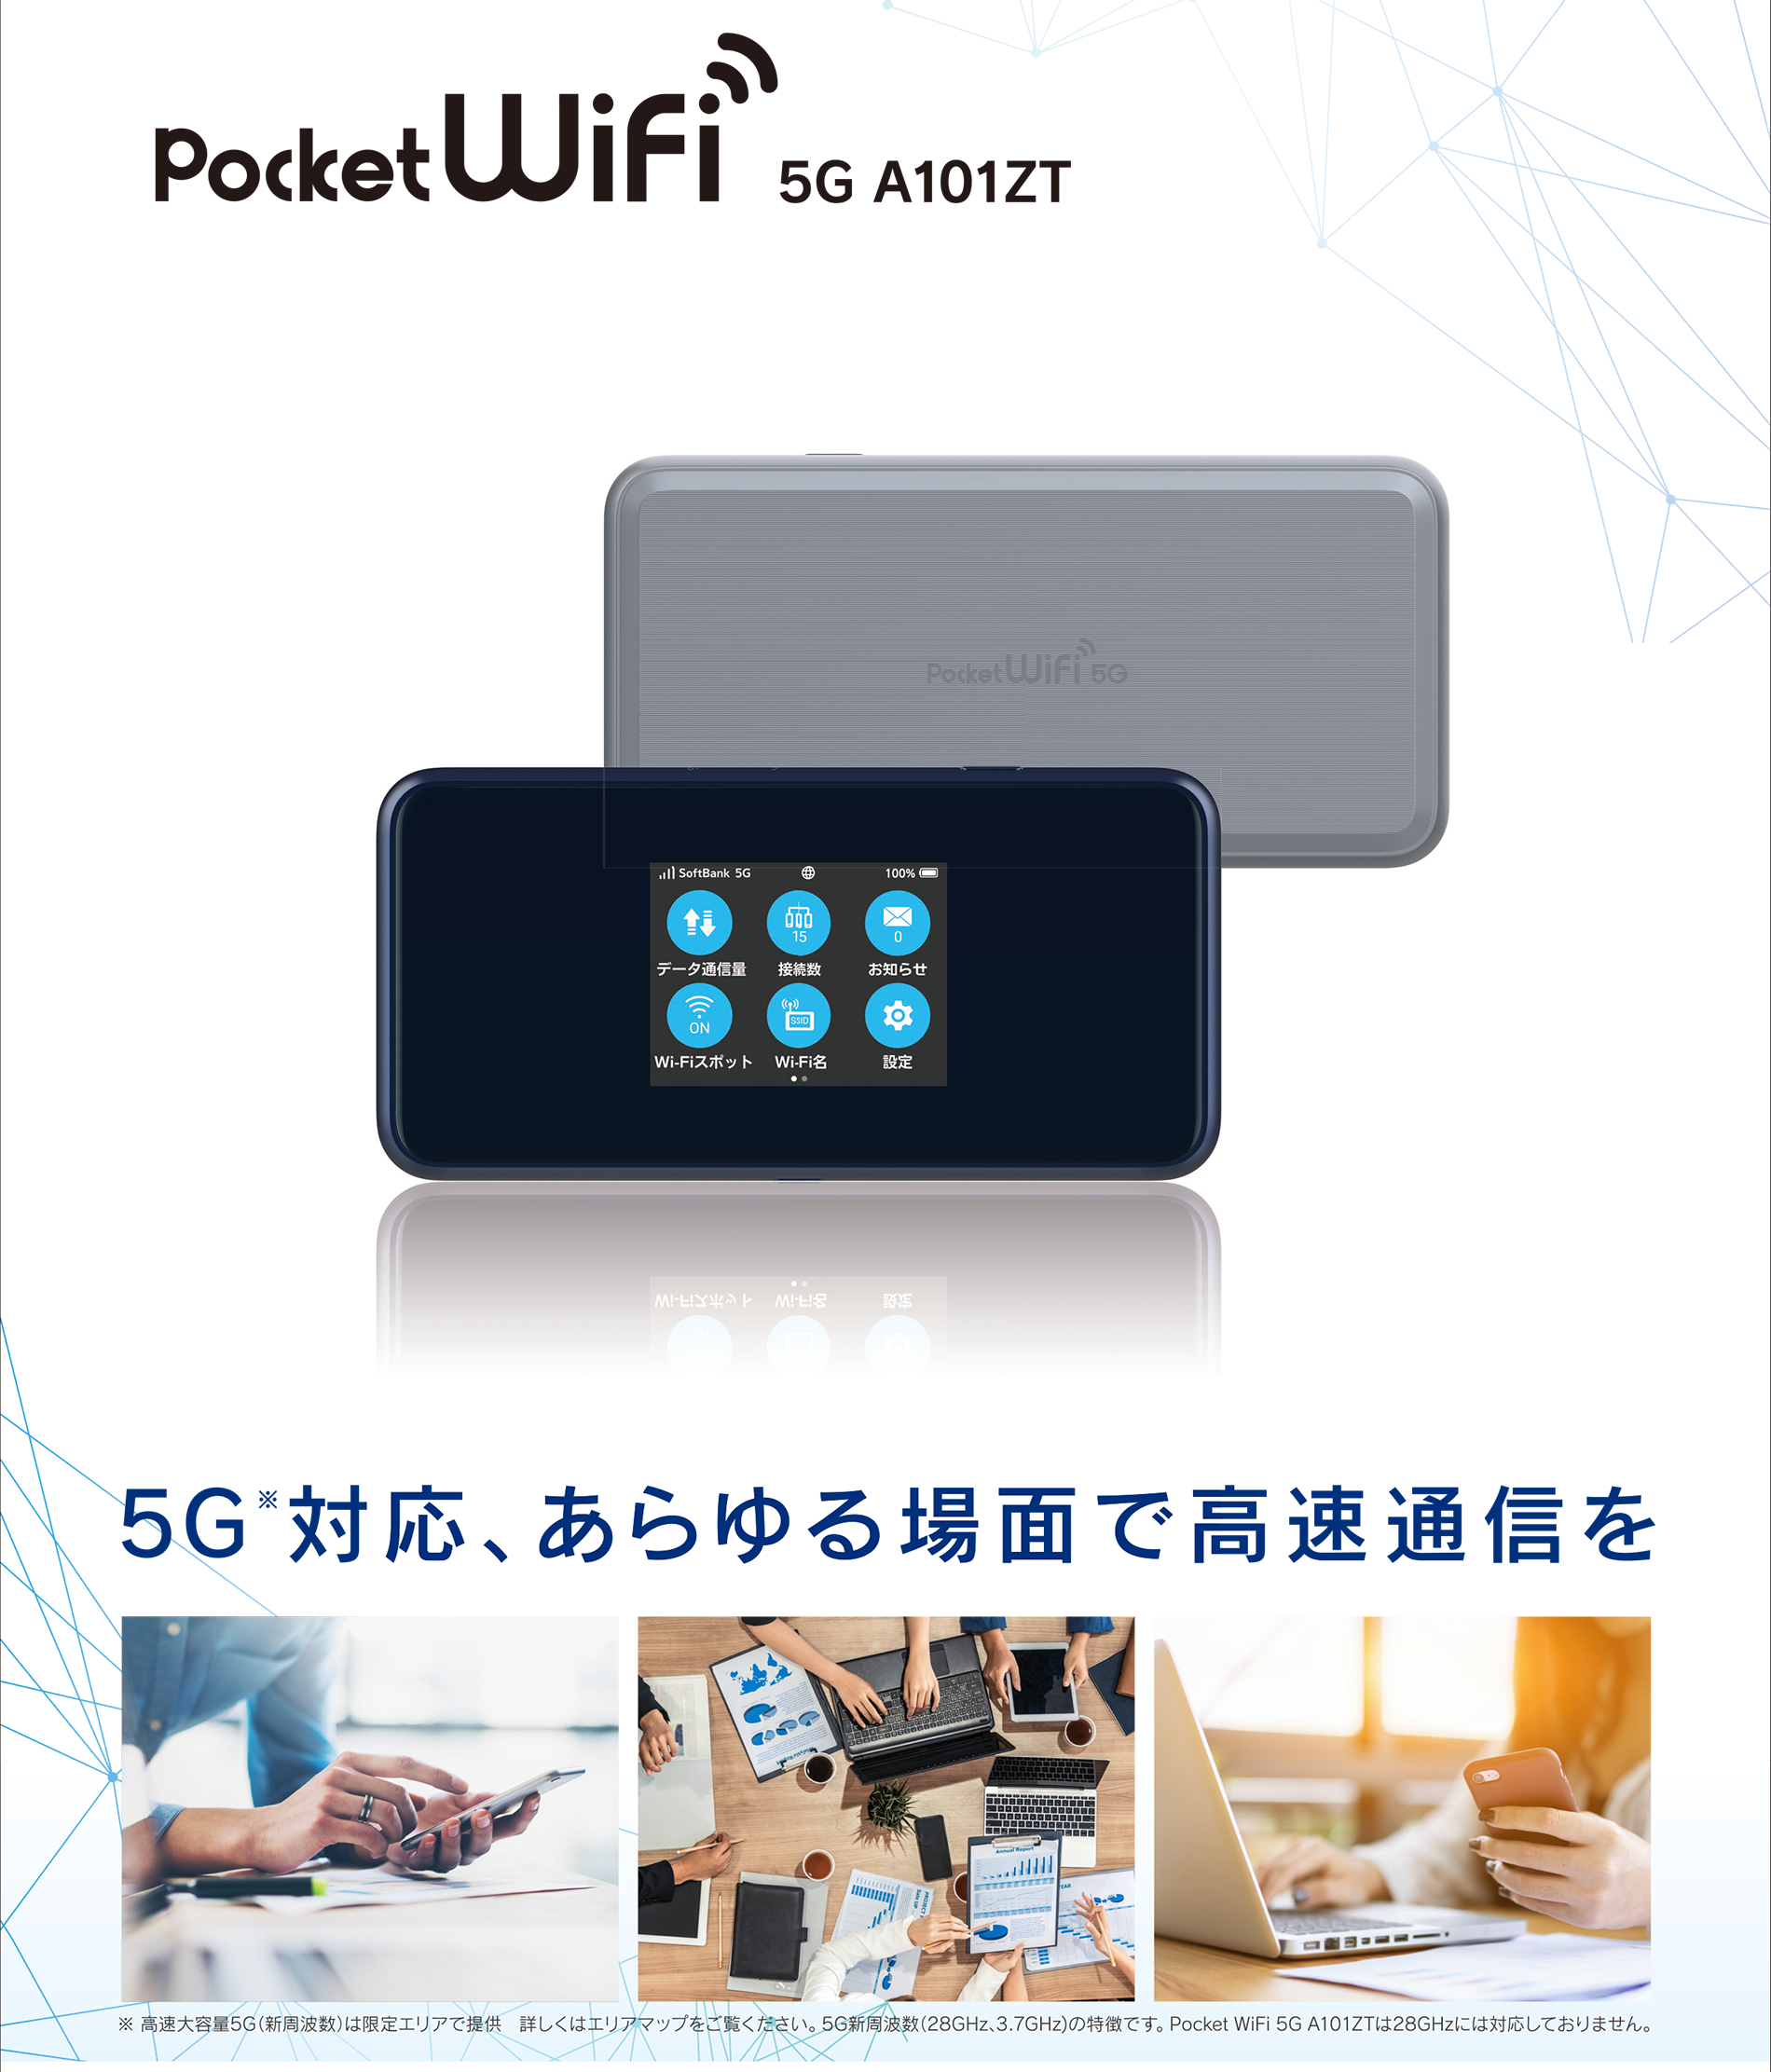 Pocket WiFi 5G A101ZT – ZTE Device Japan